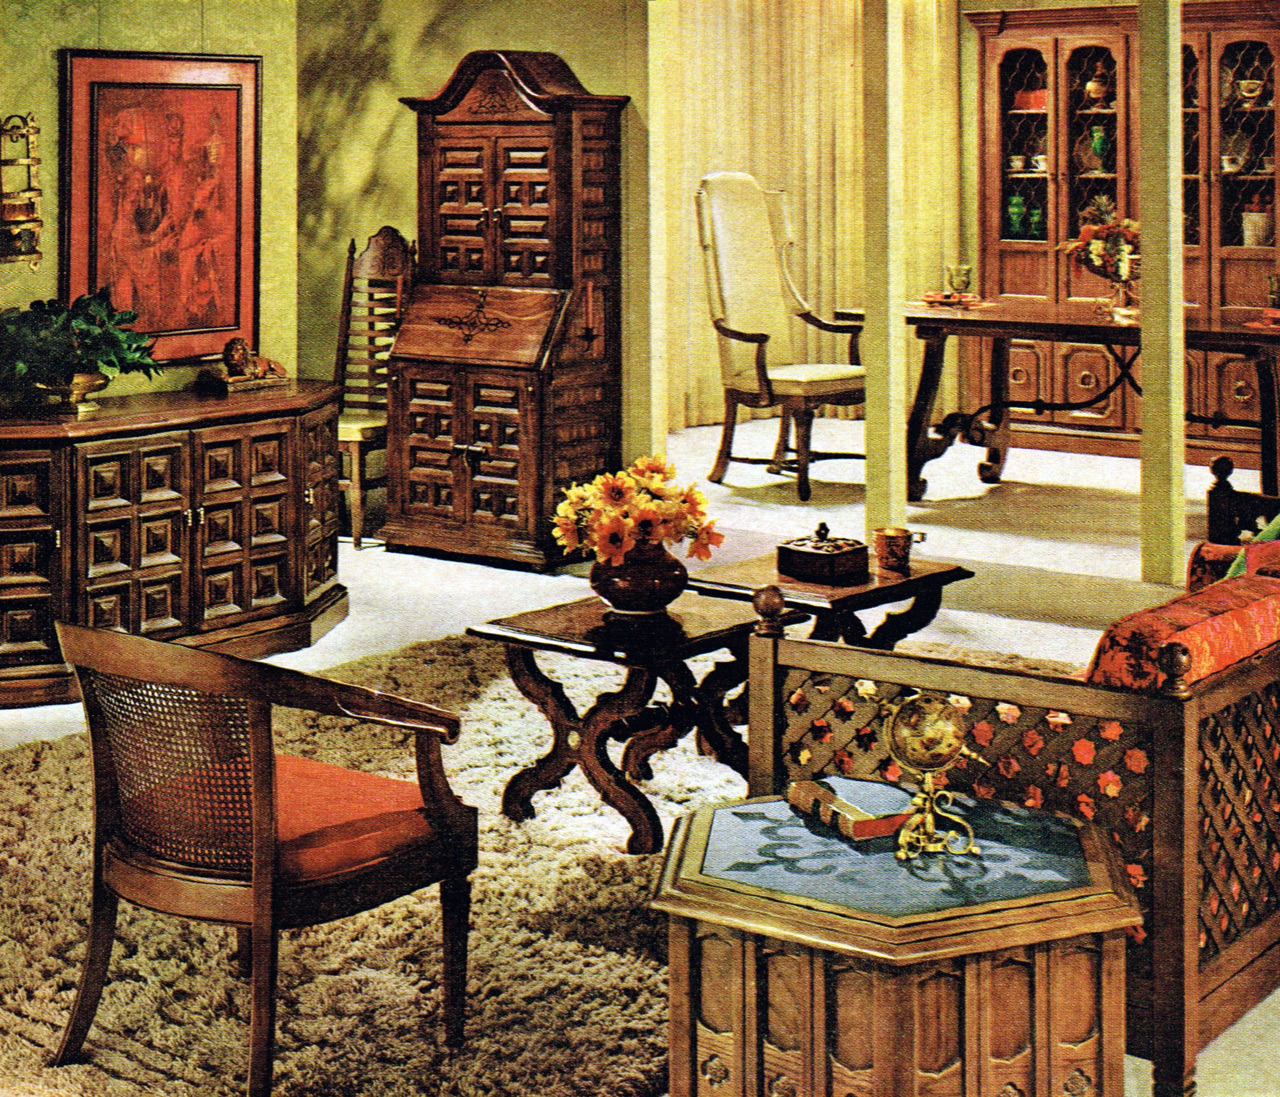 1986 drexel furniture catalog